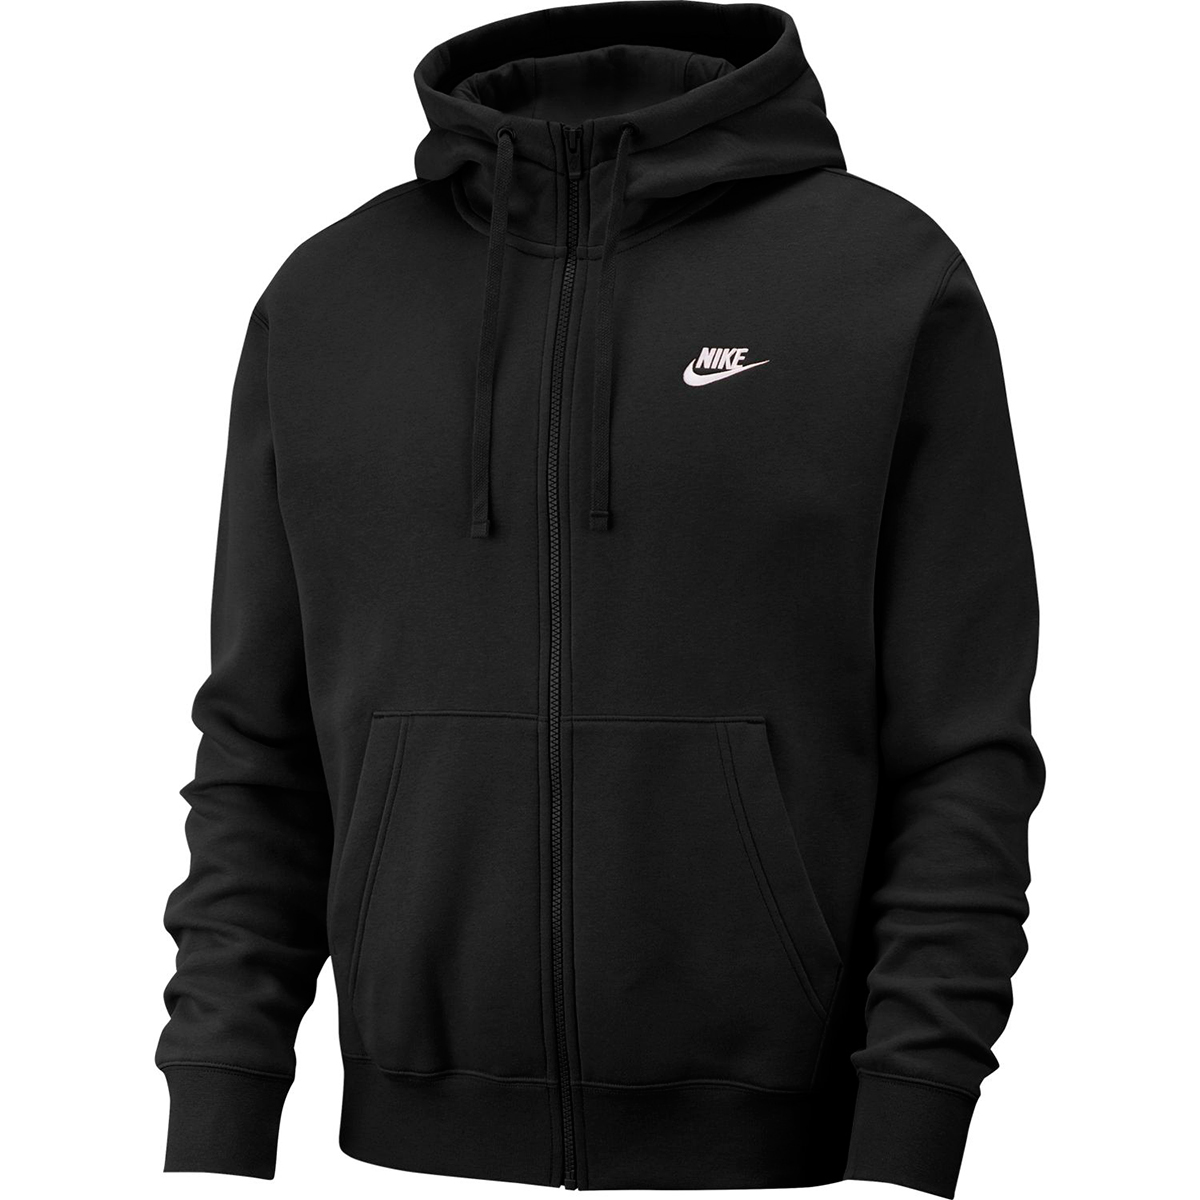 Nike Men's Full-Zip Nike Swoosh Hoodie - Black, L